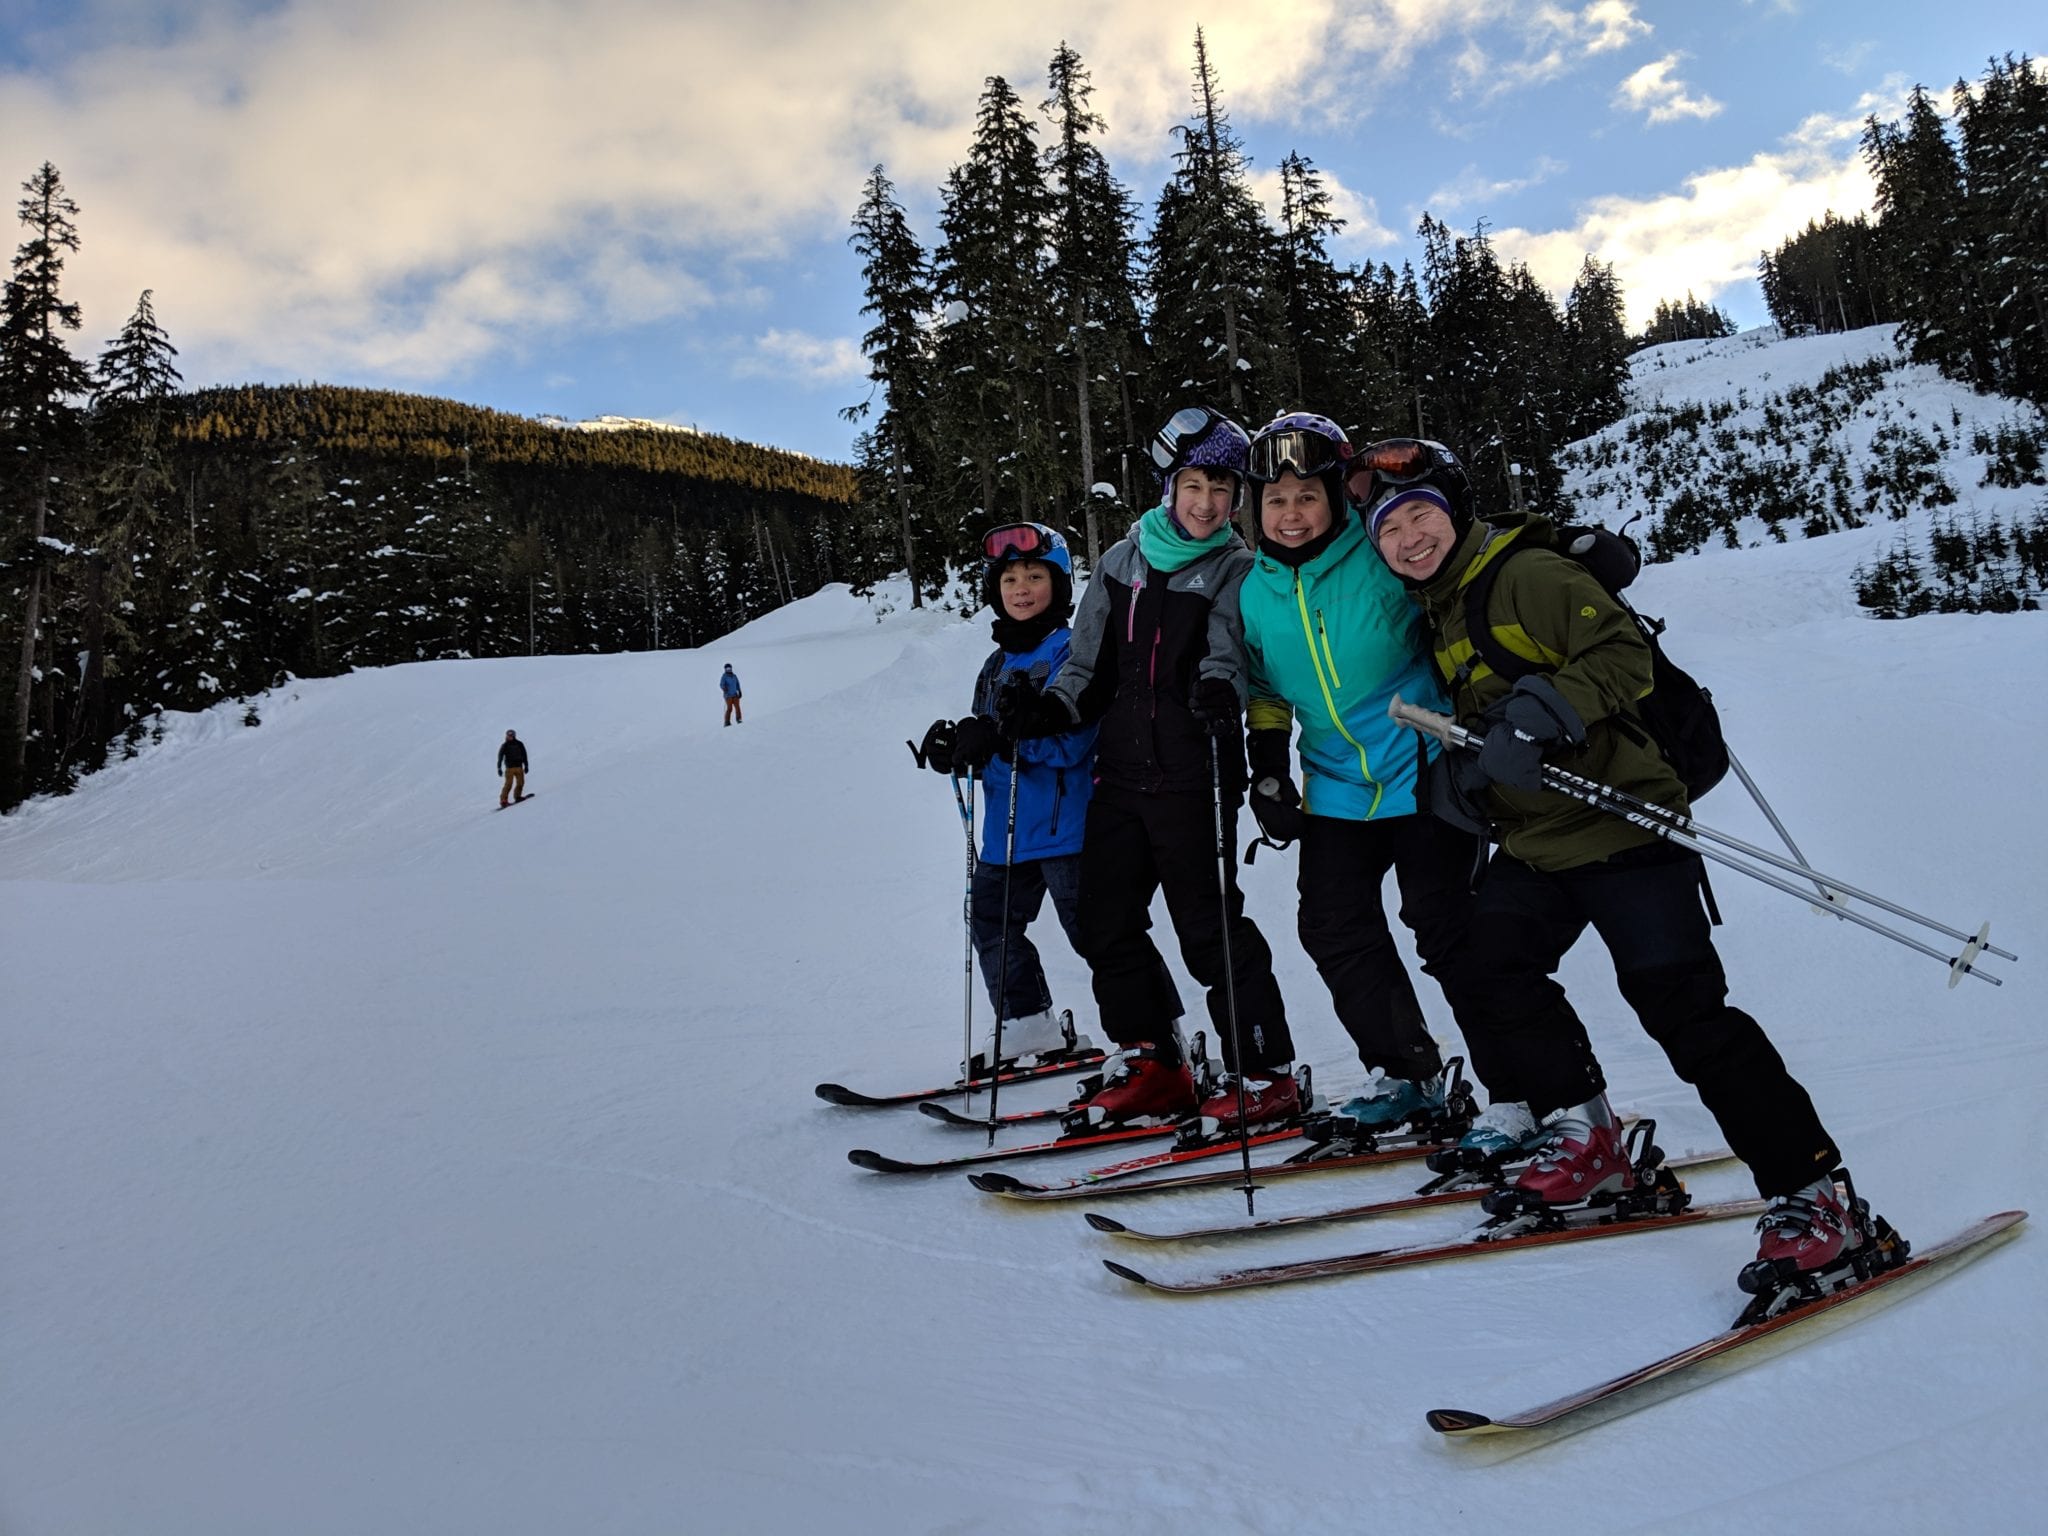 Dongho and his family enjoying a ski trip.